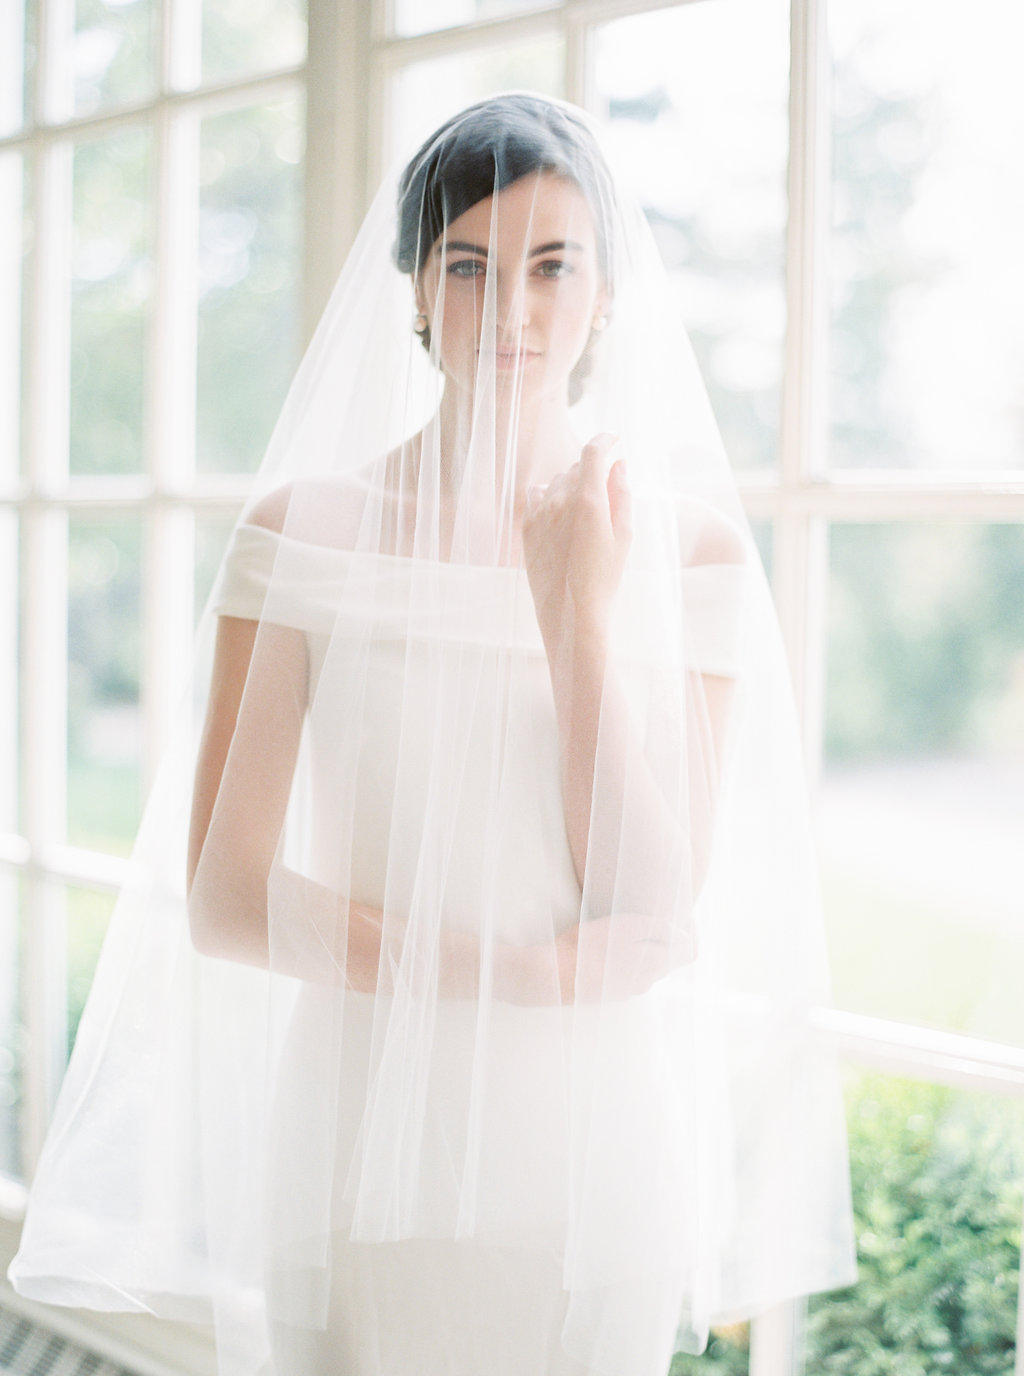 Yalice Womens Bead Edge Bride Wedding Veil 2T Two-Tier Waist Length Bridal Veils Soft Tulle Hair Accessories